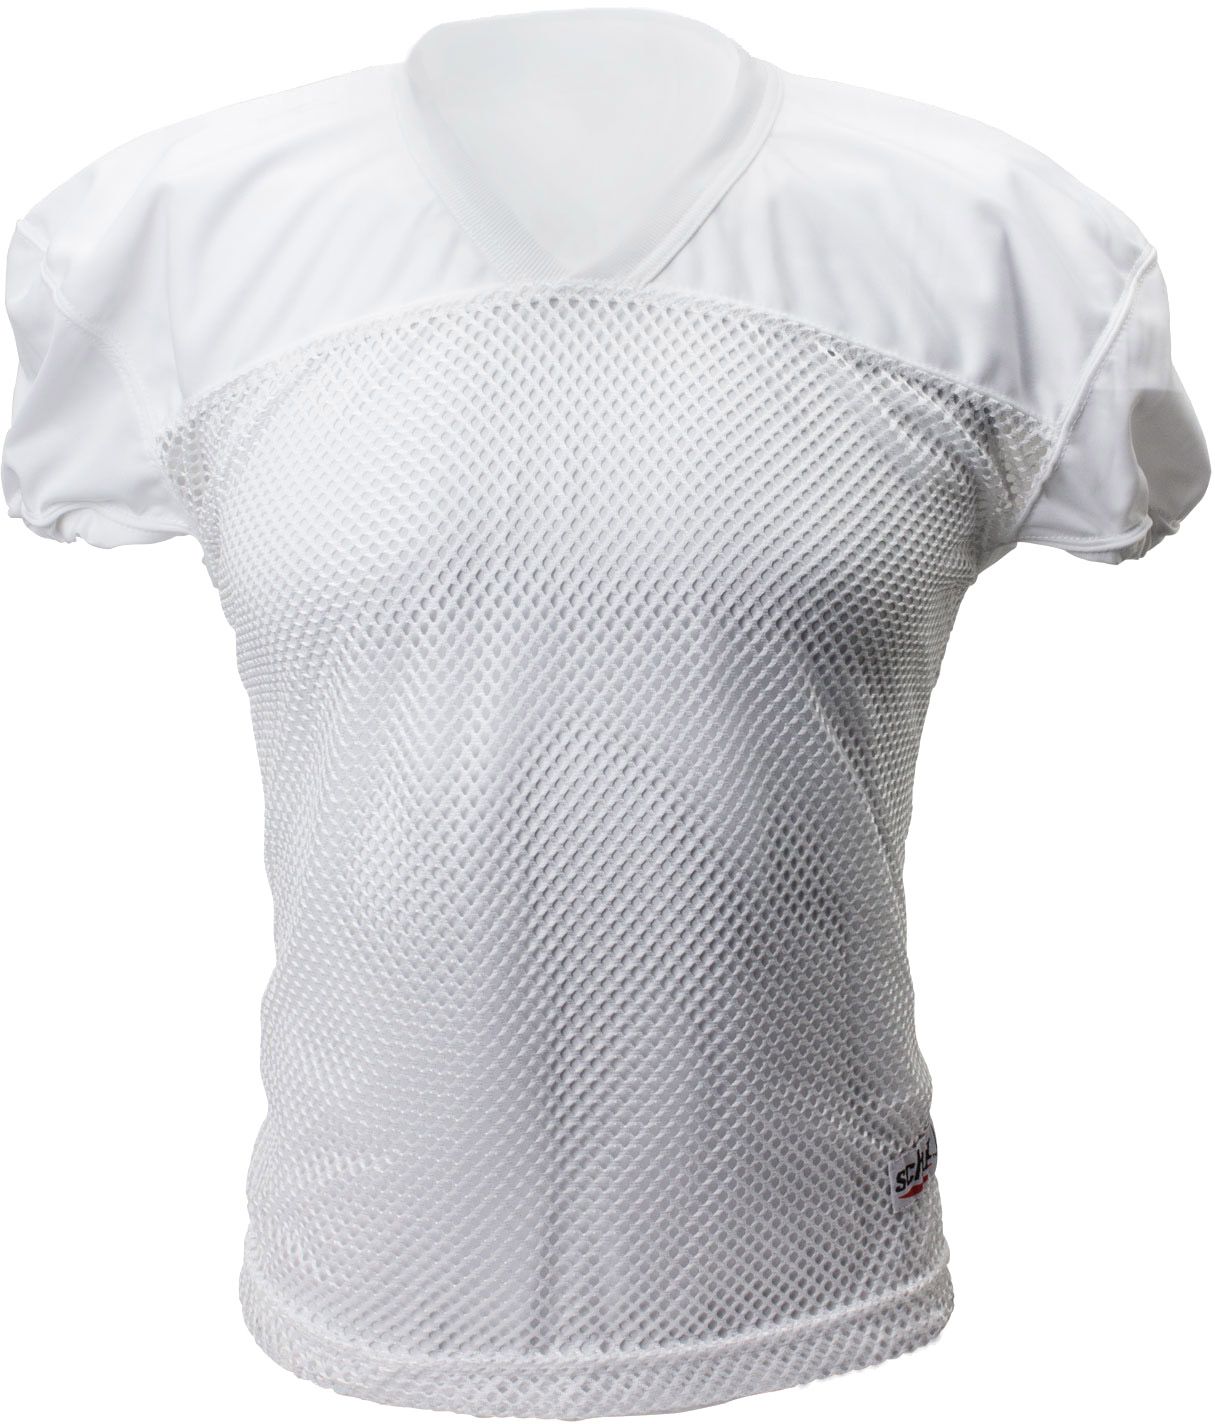 white blank jersey